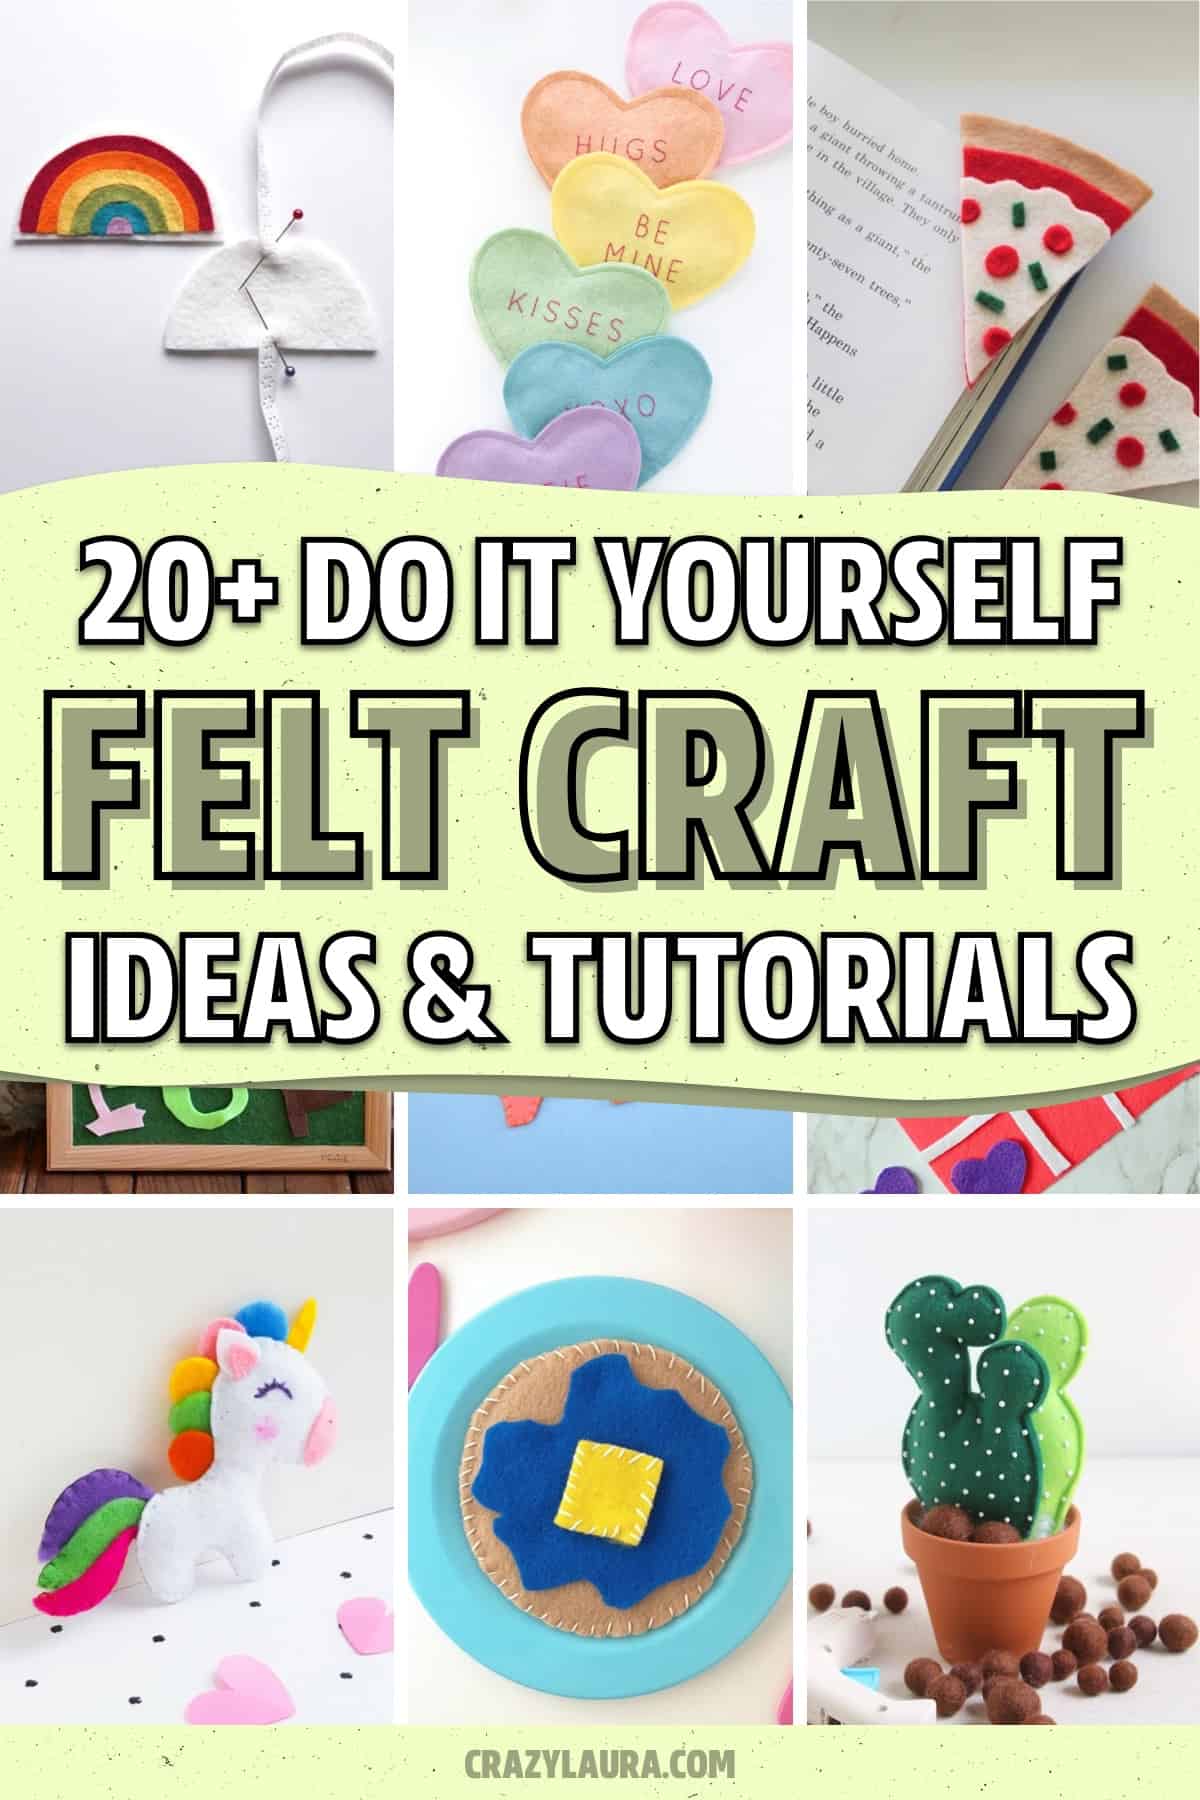 craft example ideas with felt